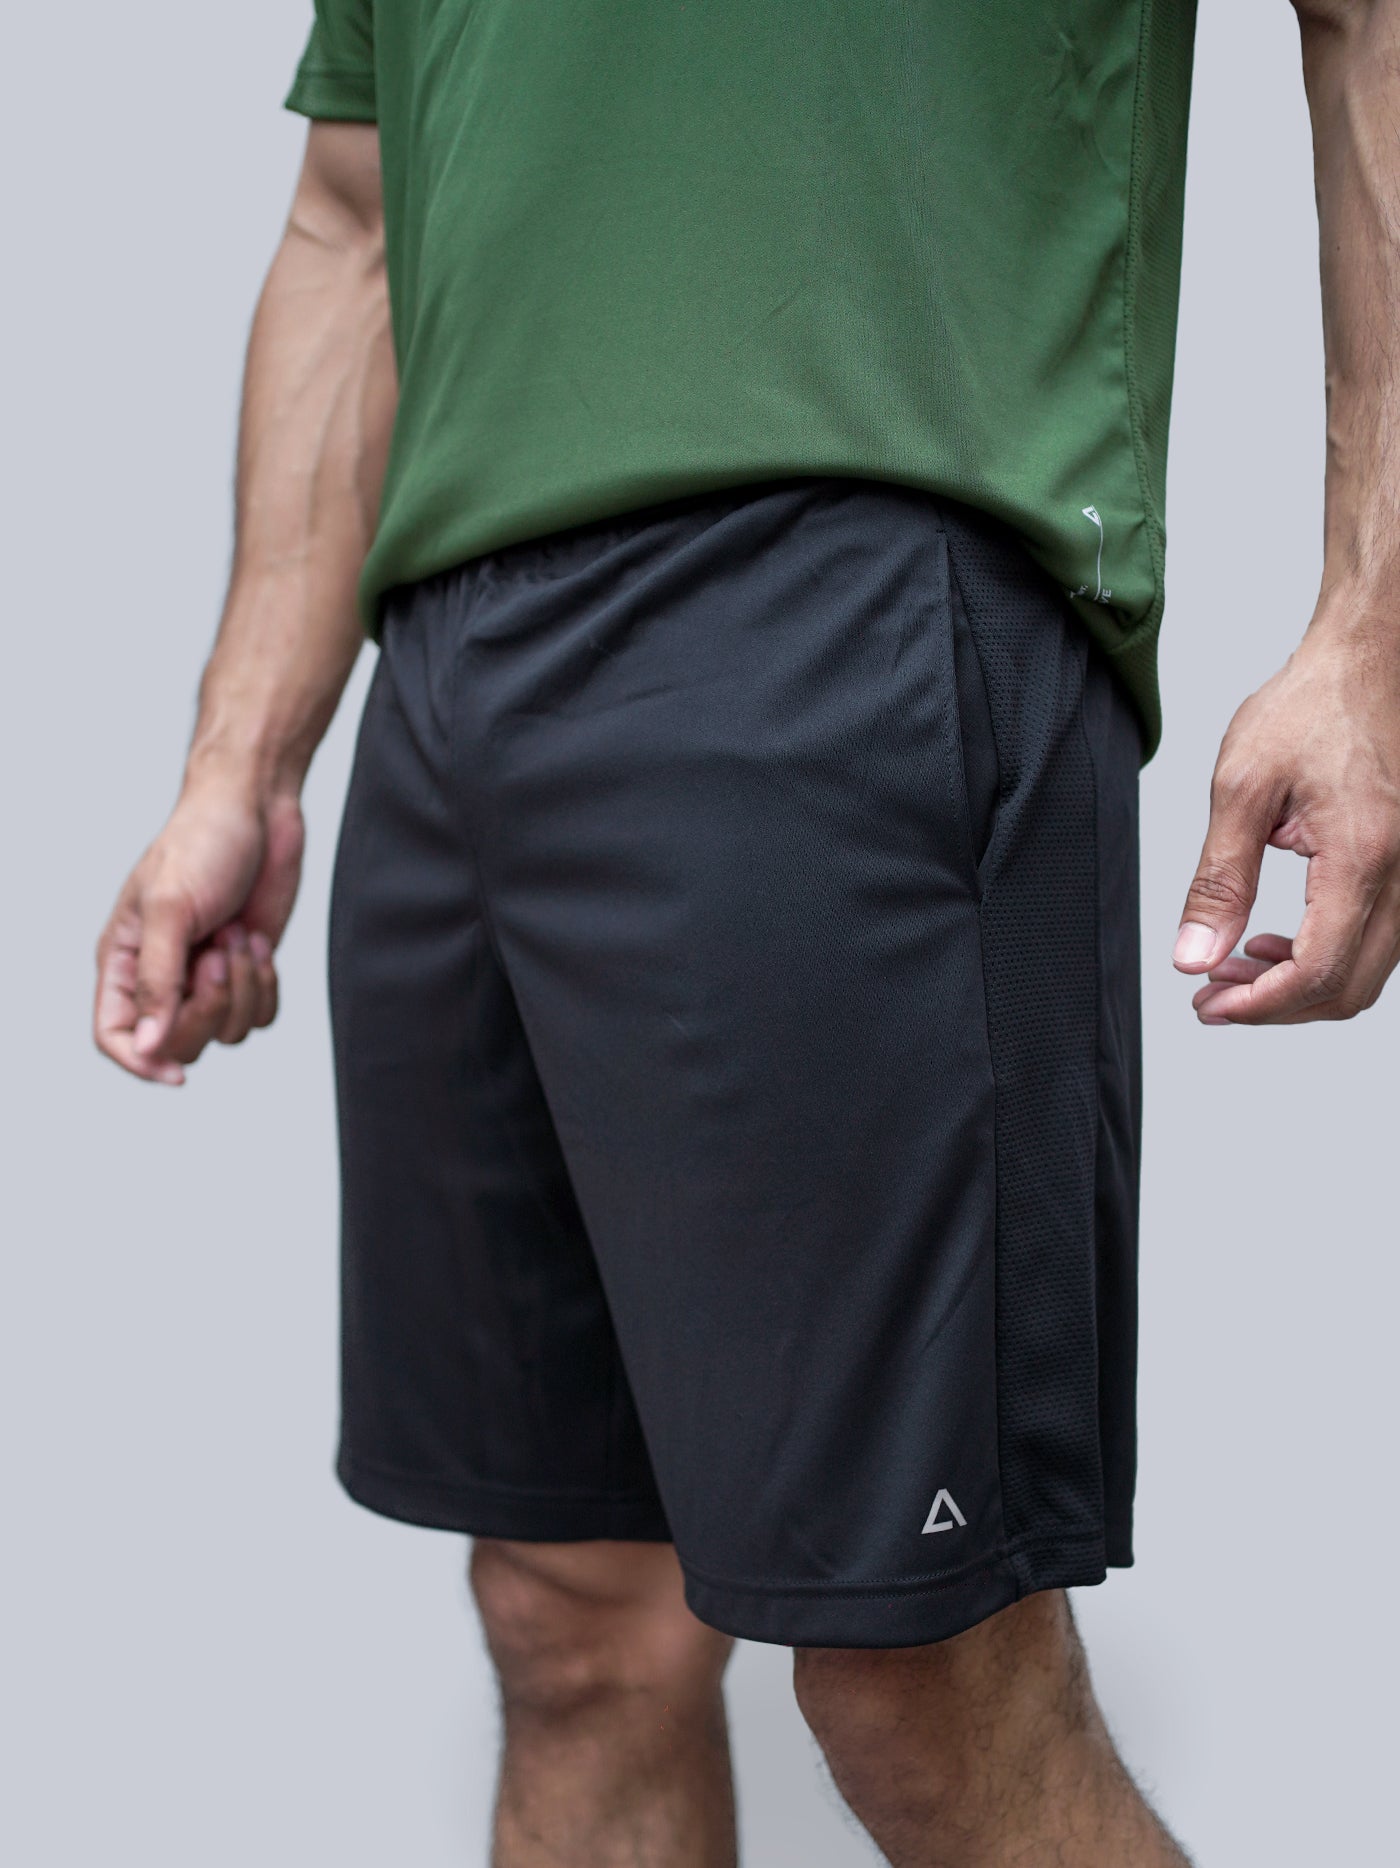 AvivaMax Training Shorts (Men)